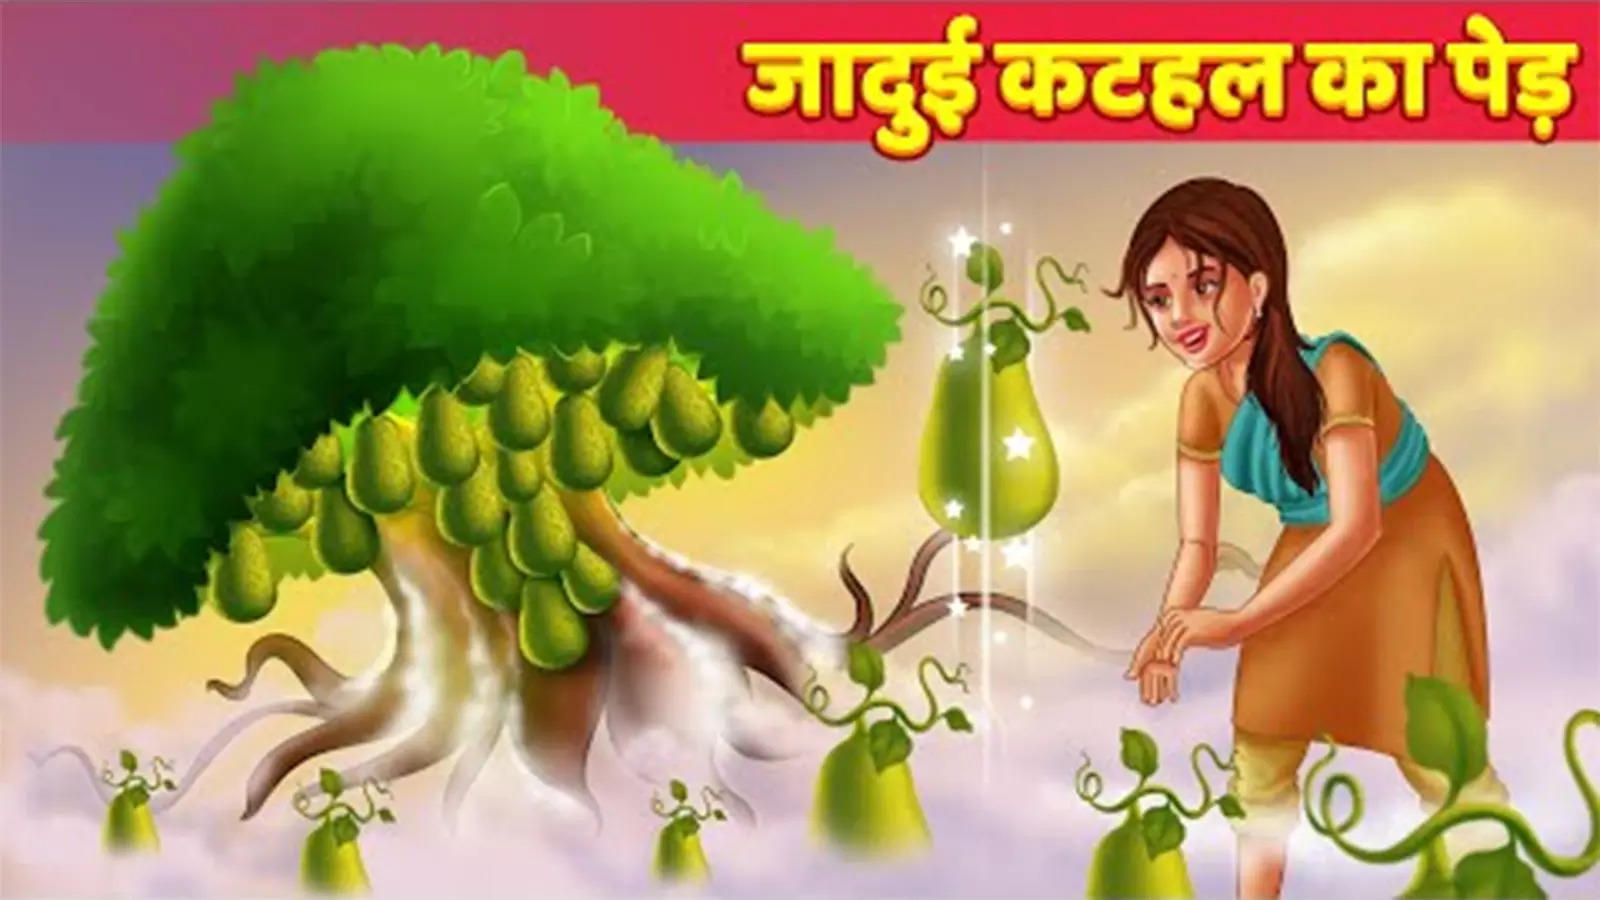 story of tree in hindi